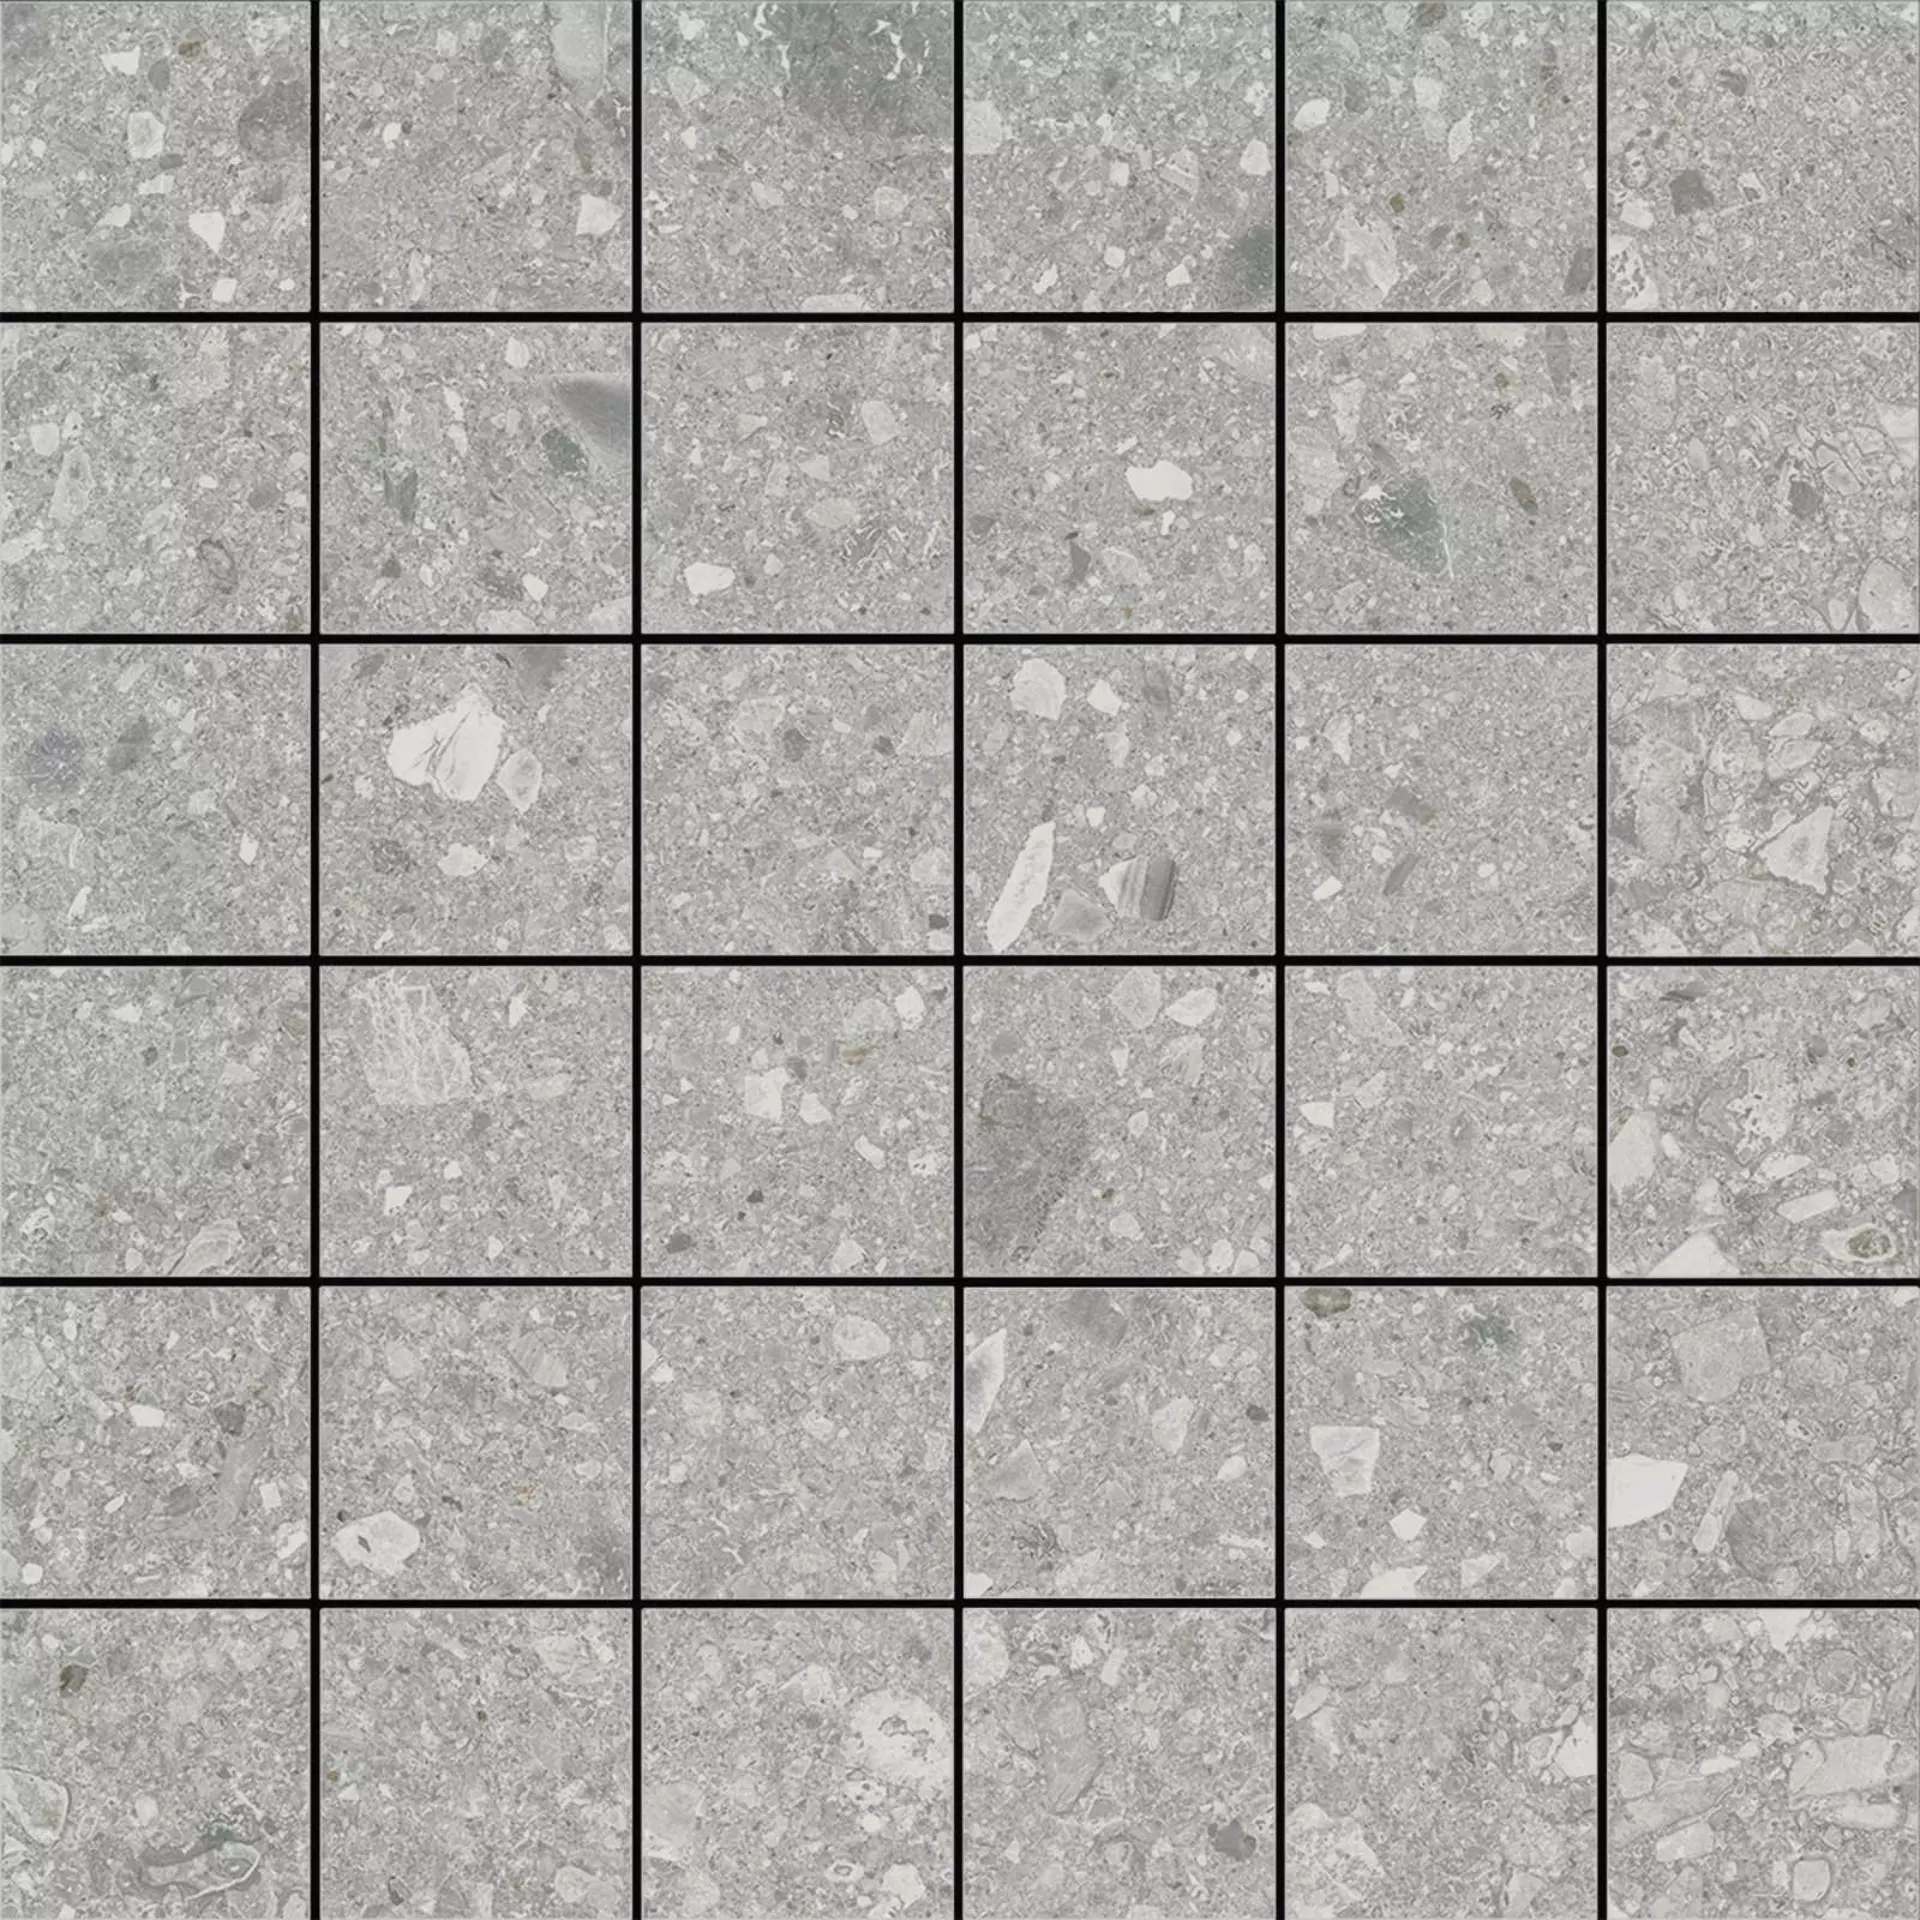 Bodenfliese,Wandfliese Marazzi Mystone Ceppo Di Gre Grey Naturale – Matt Grey M0NN matt natur 30x30cm Mosaik 5x5 10mm